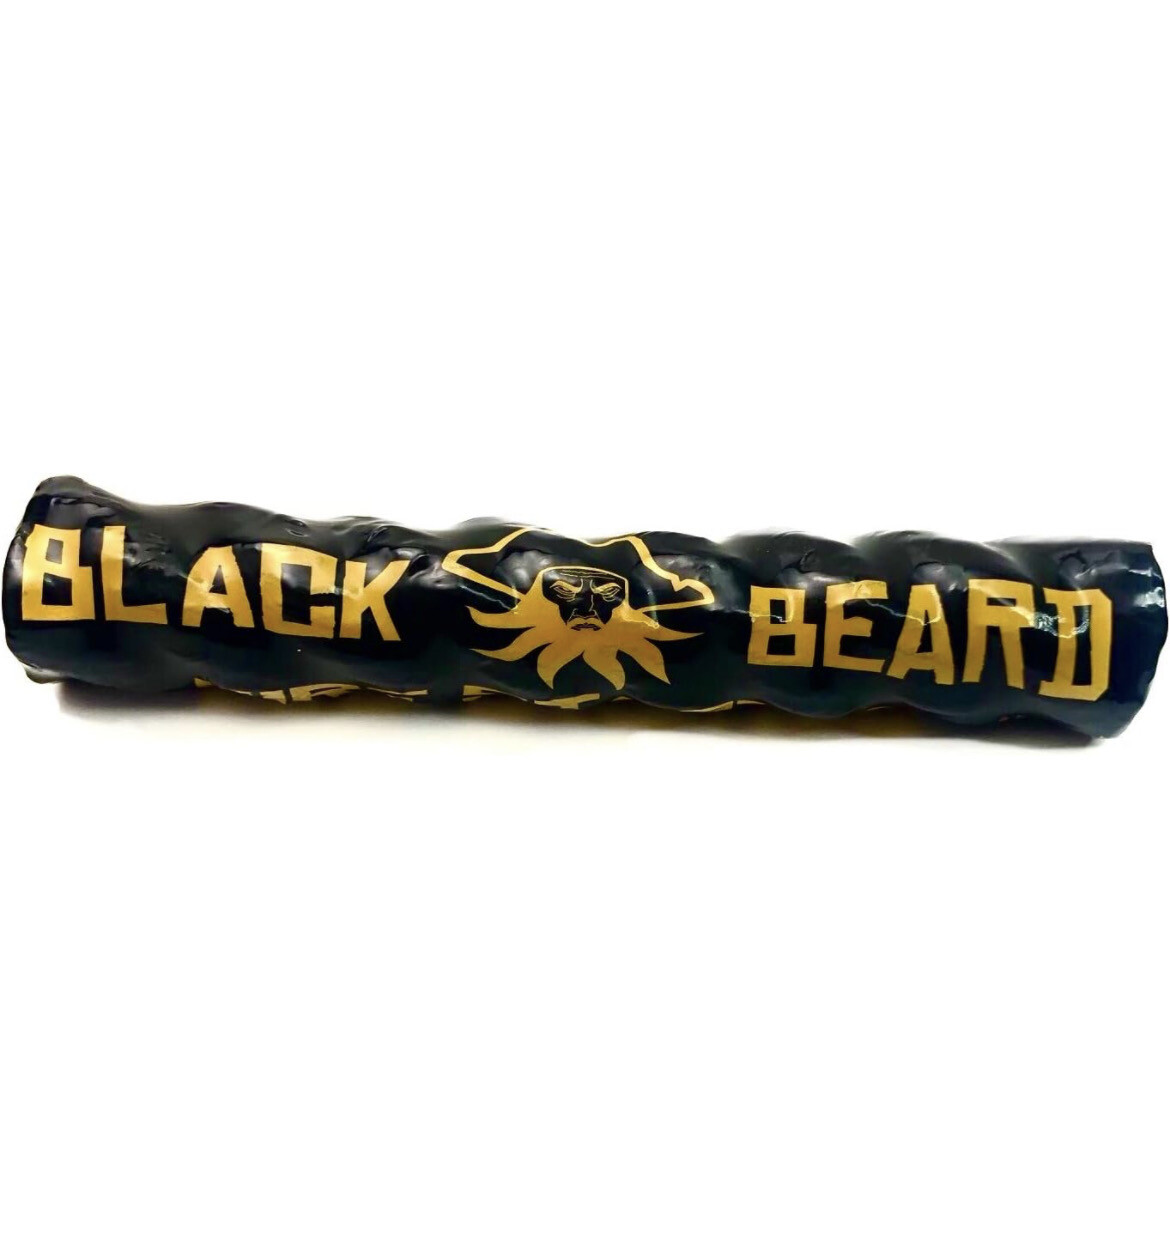 Black Beard Fire Starter Rope (1 Rope) BlackBeard